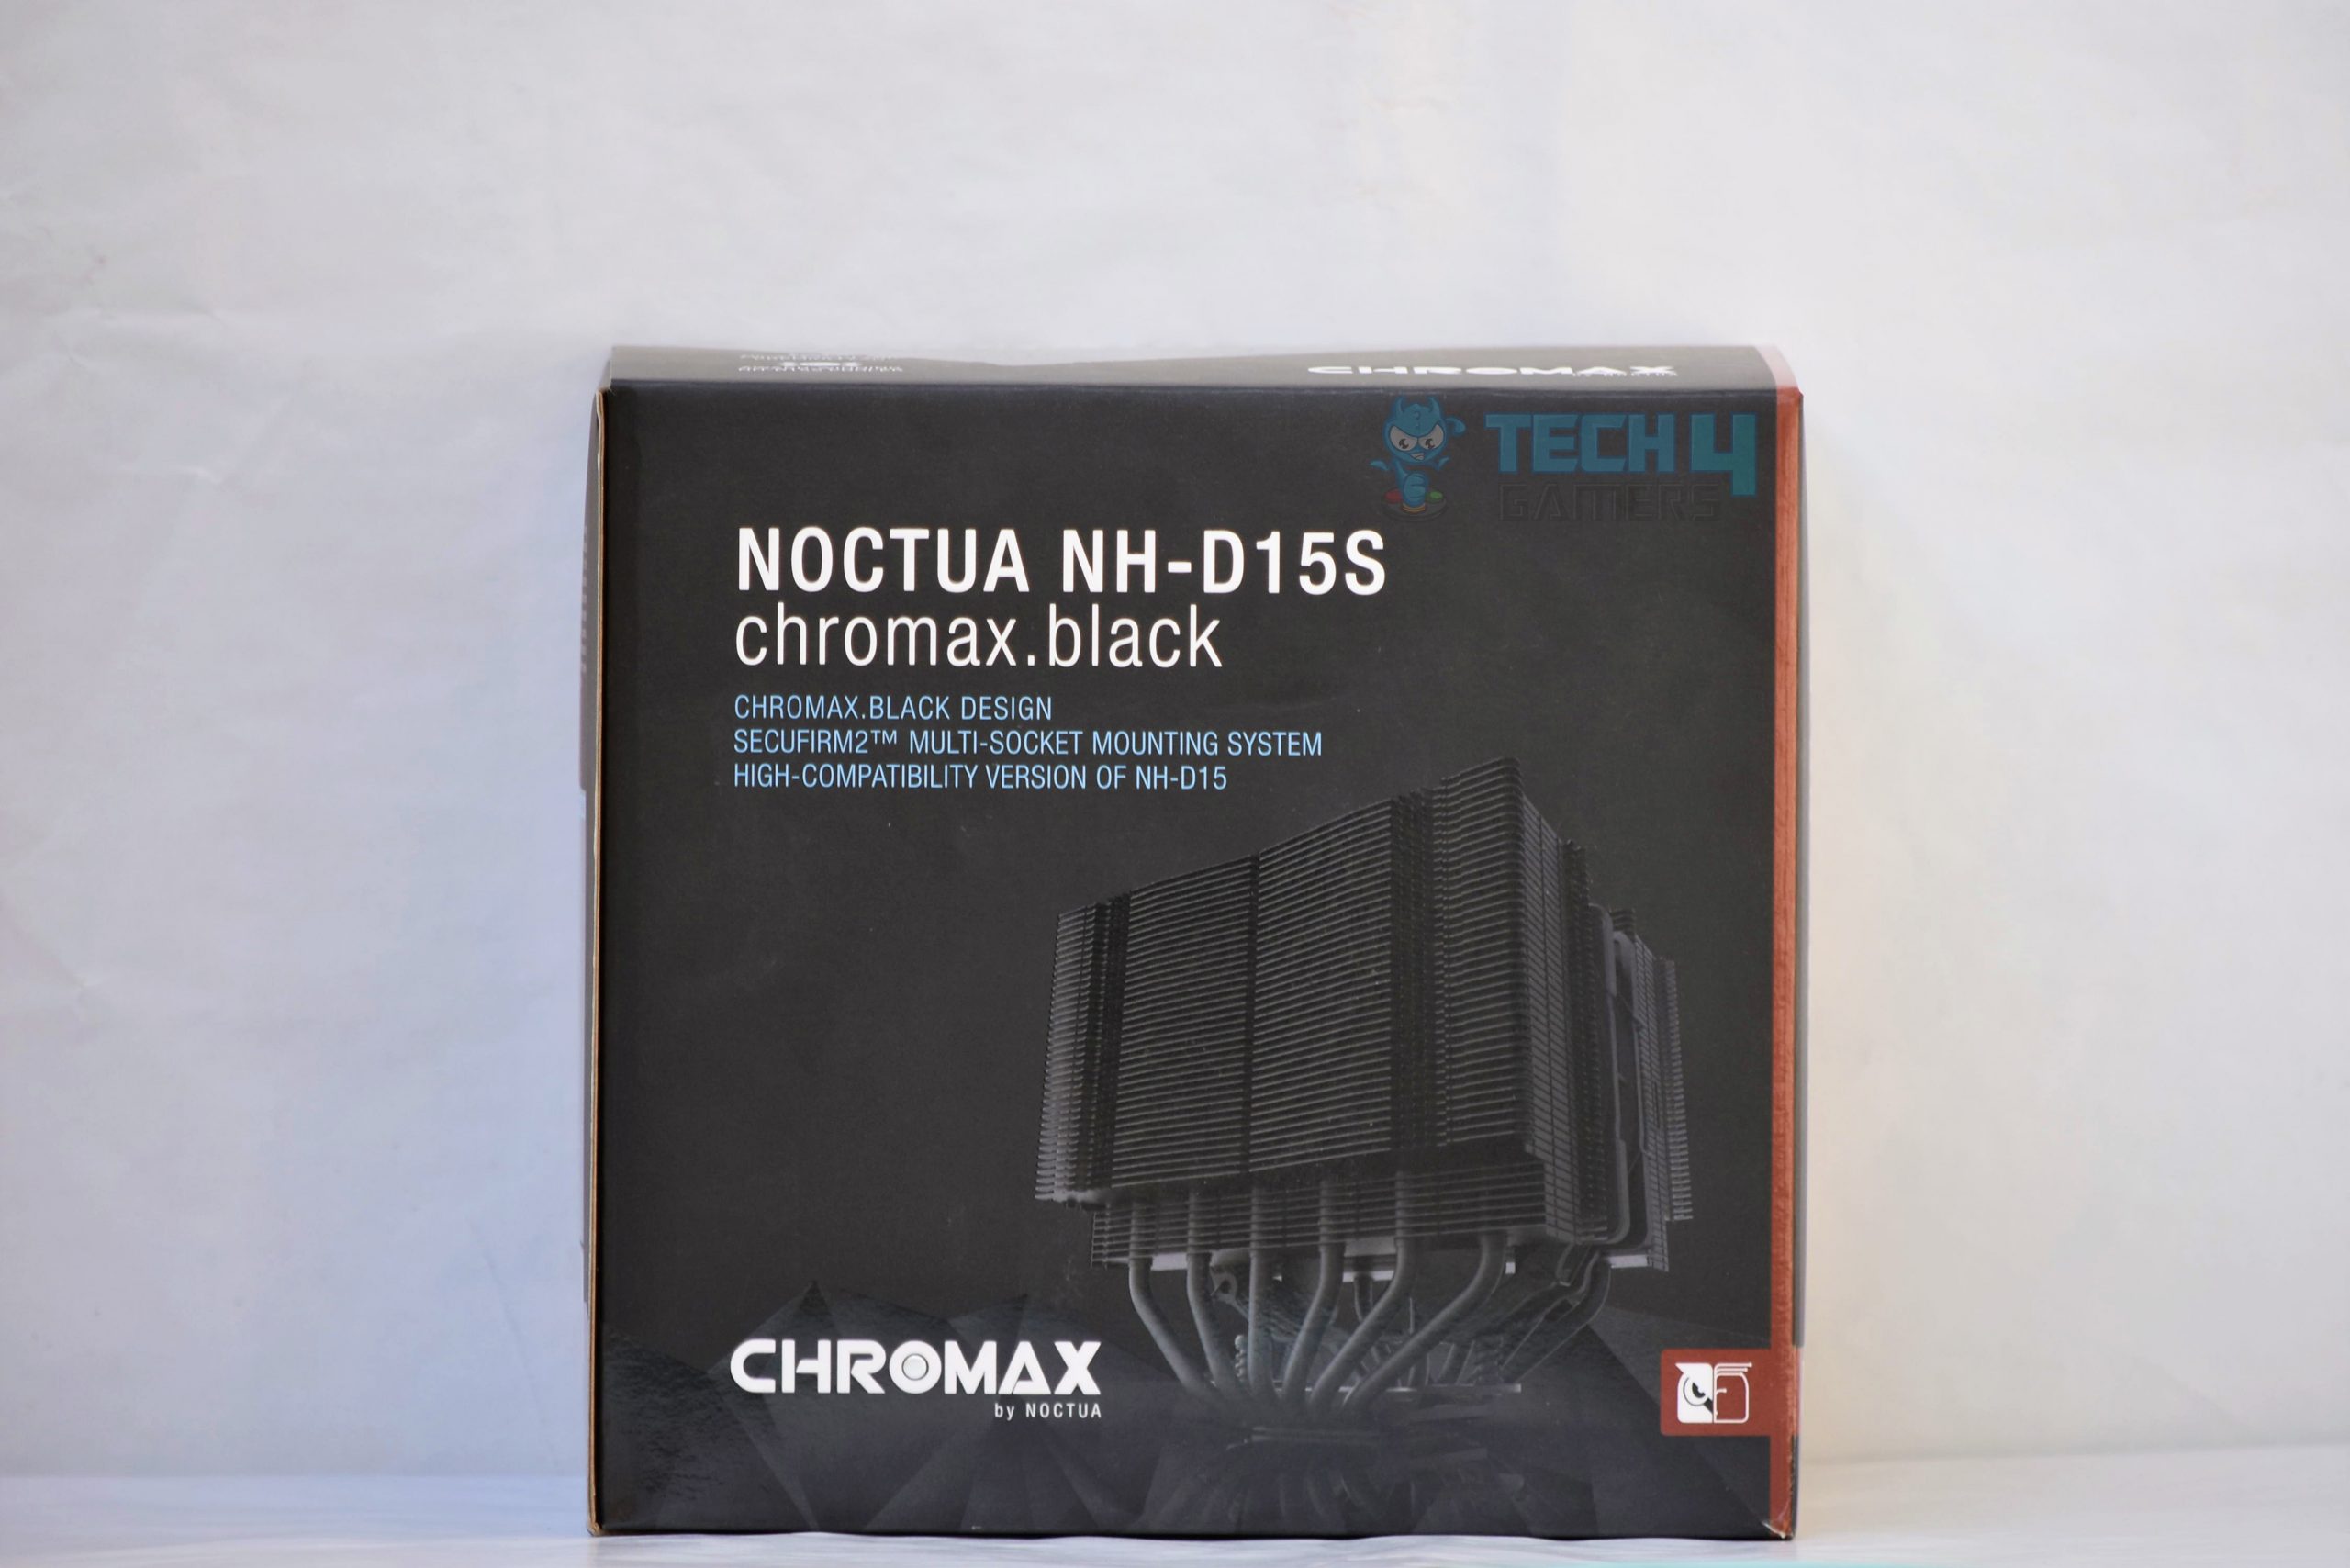 Noctua NH-D15 Chromax Black reviews - LDLC customers comments and